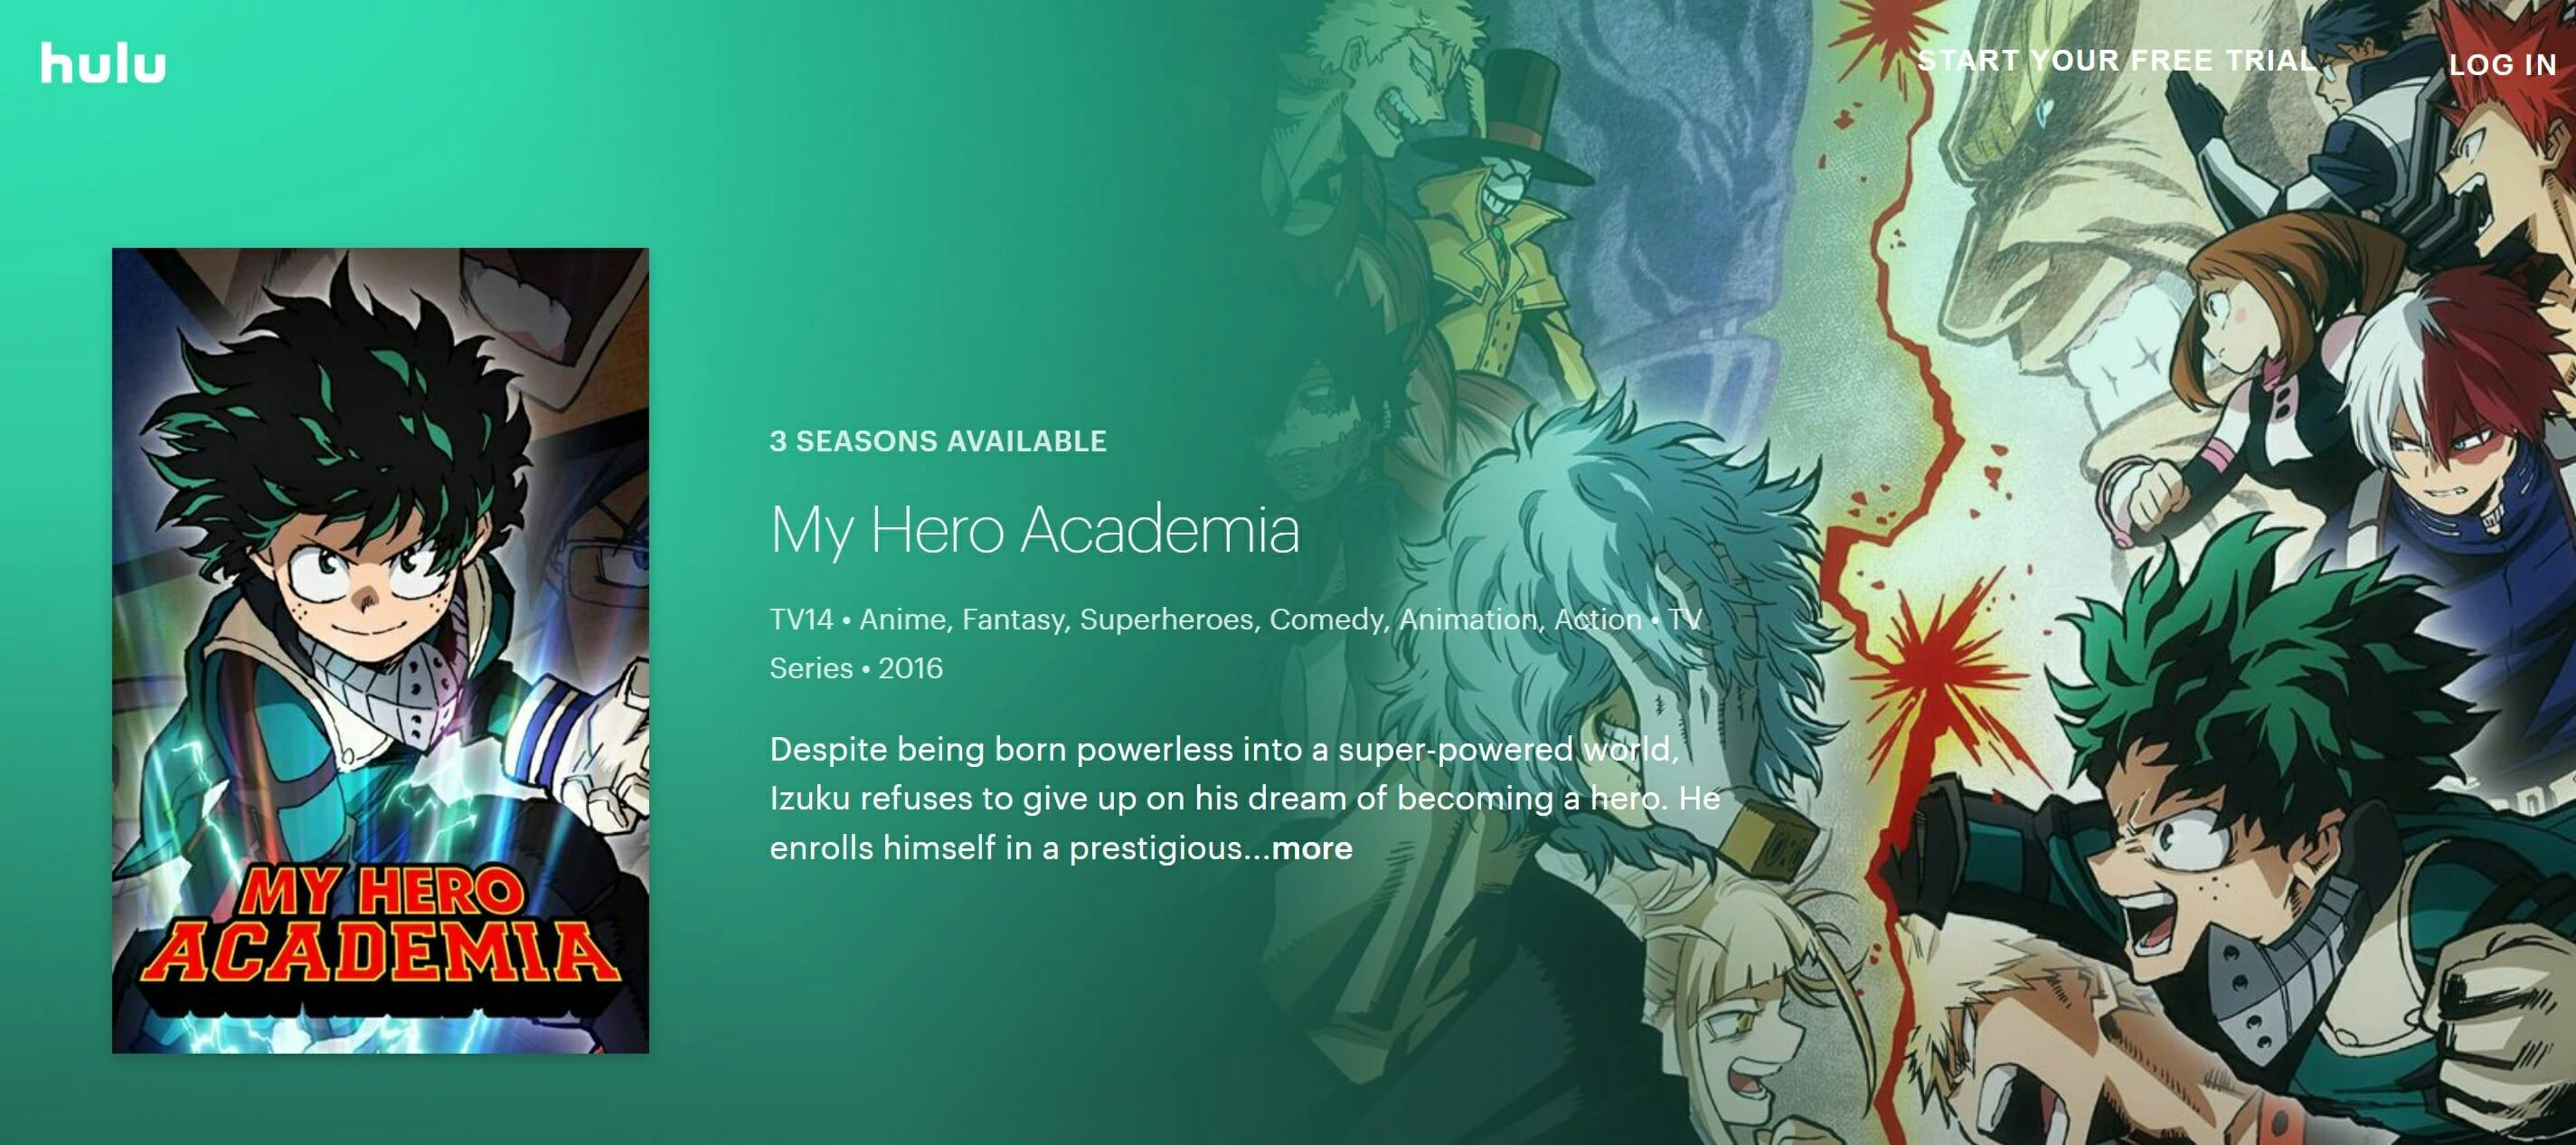 My Hero Academia   TV (Free Trial)